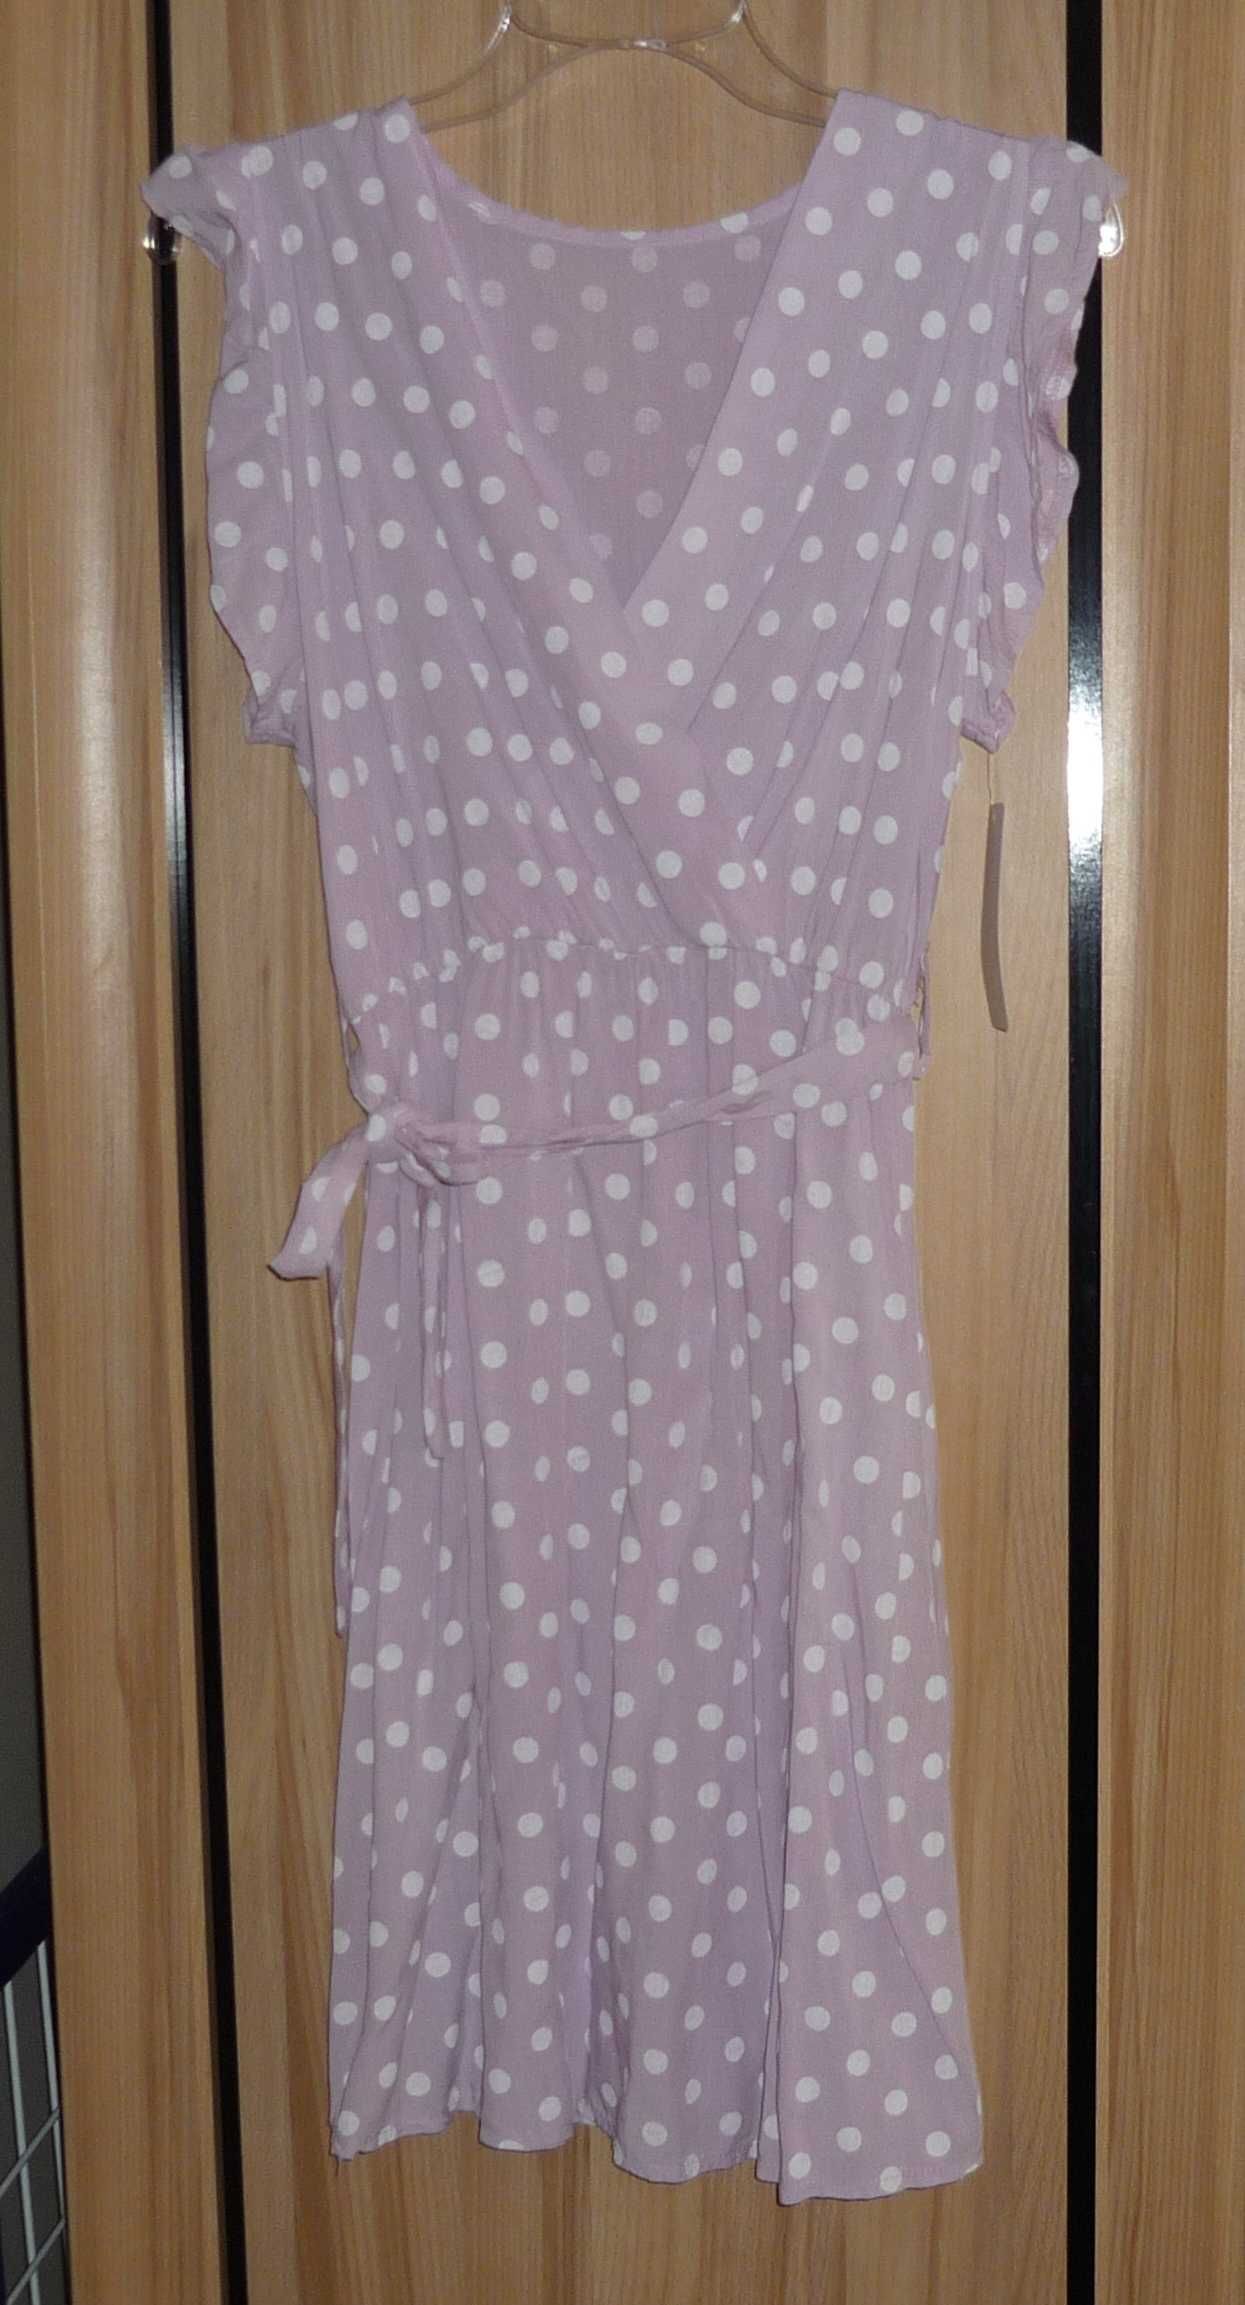 Nowa fioletowa sukienka kopertowa M/L kropki